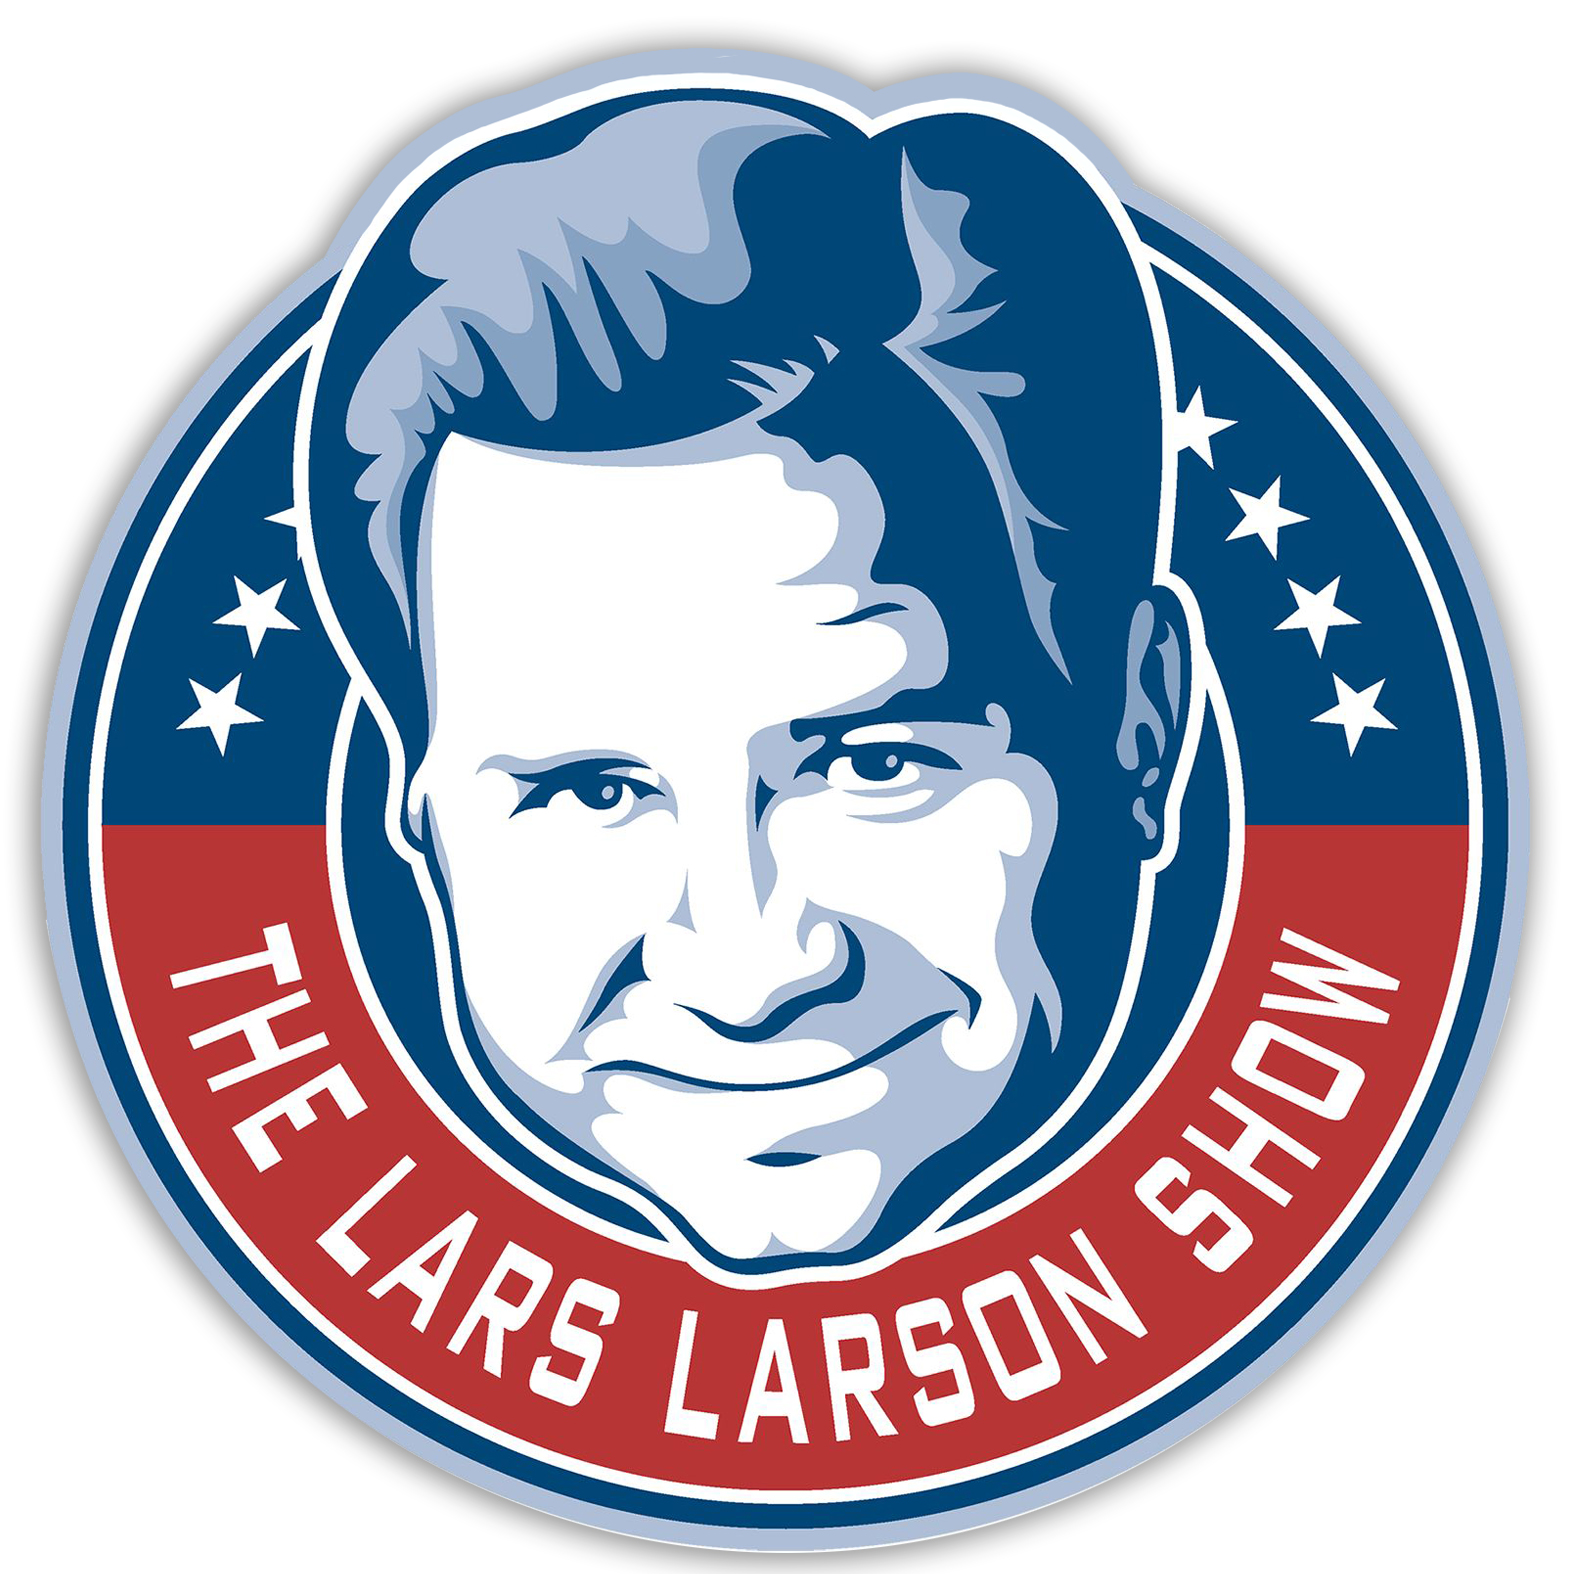 The Lars Larson Show